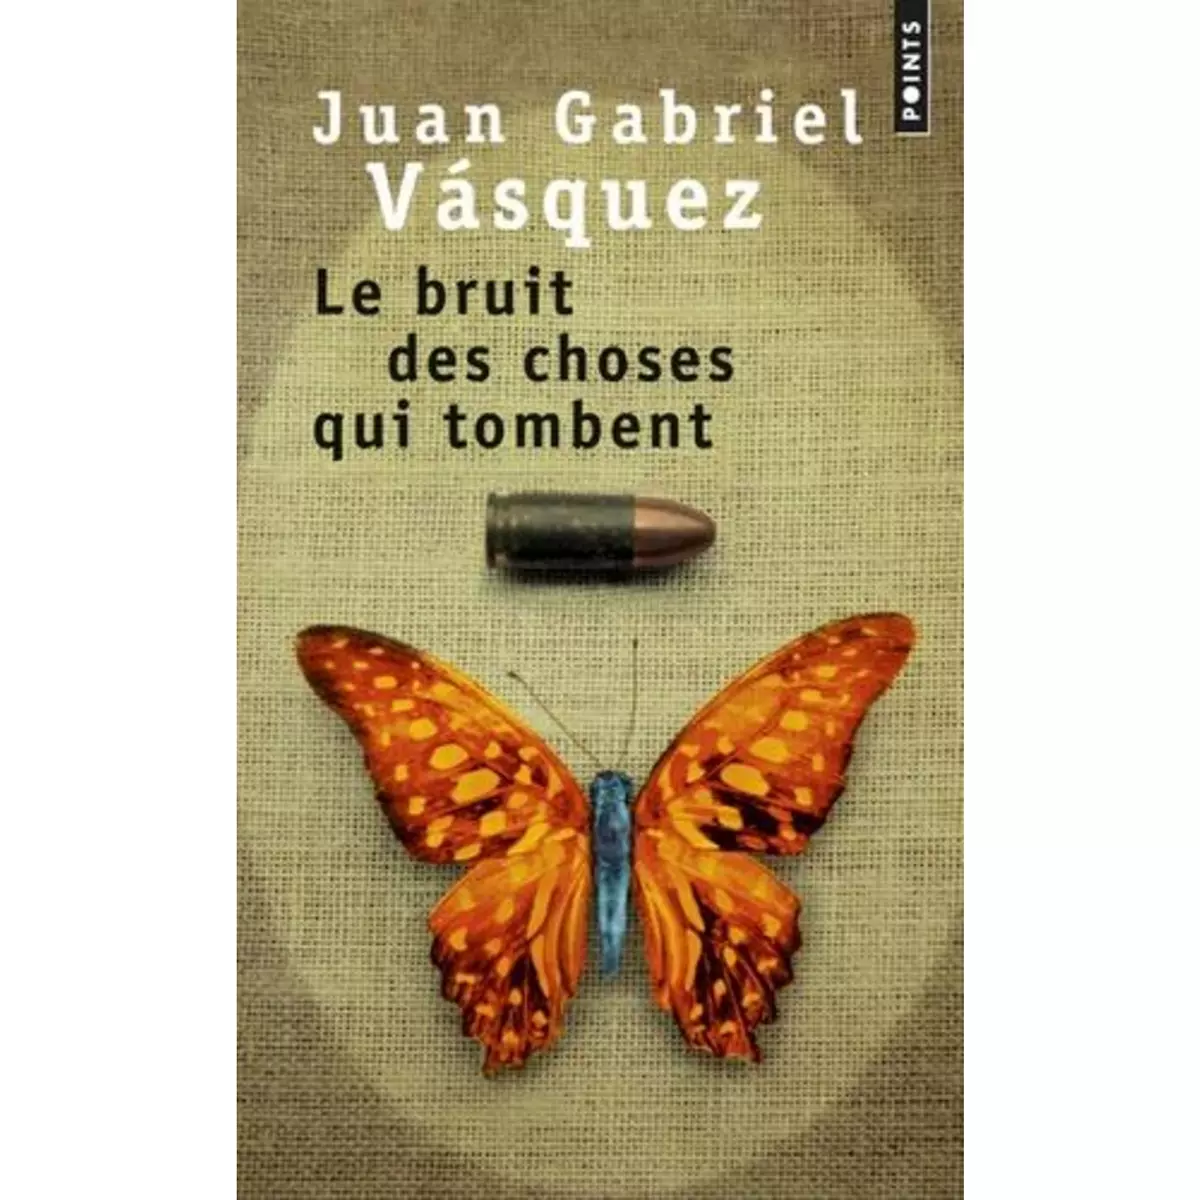  LE BRUIT DES CHOSES QUI TOMBENT, Vasquez Juan Gabriel